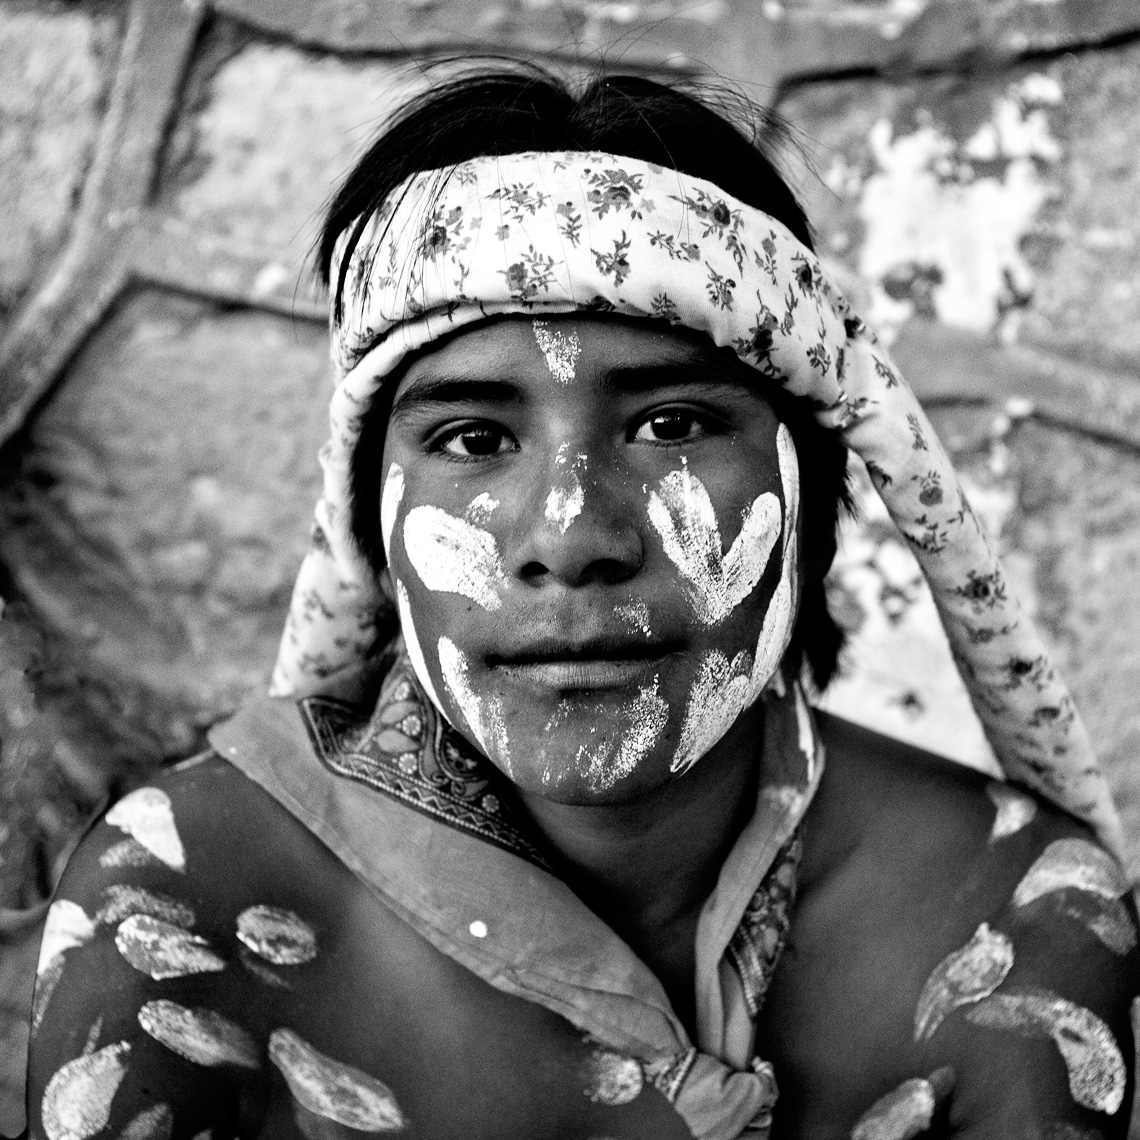 Tarahumara Indian Boy 1 Jpg Lake Oswego Portrait And Family Photographer Lake Oswego Portland Or Eric Powell Photography